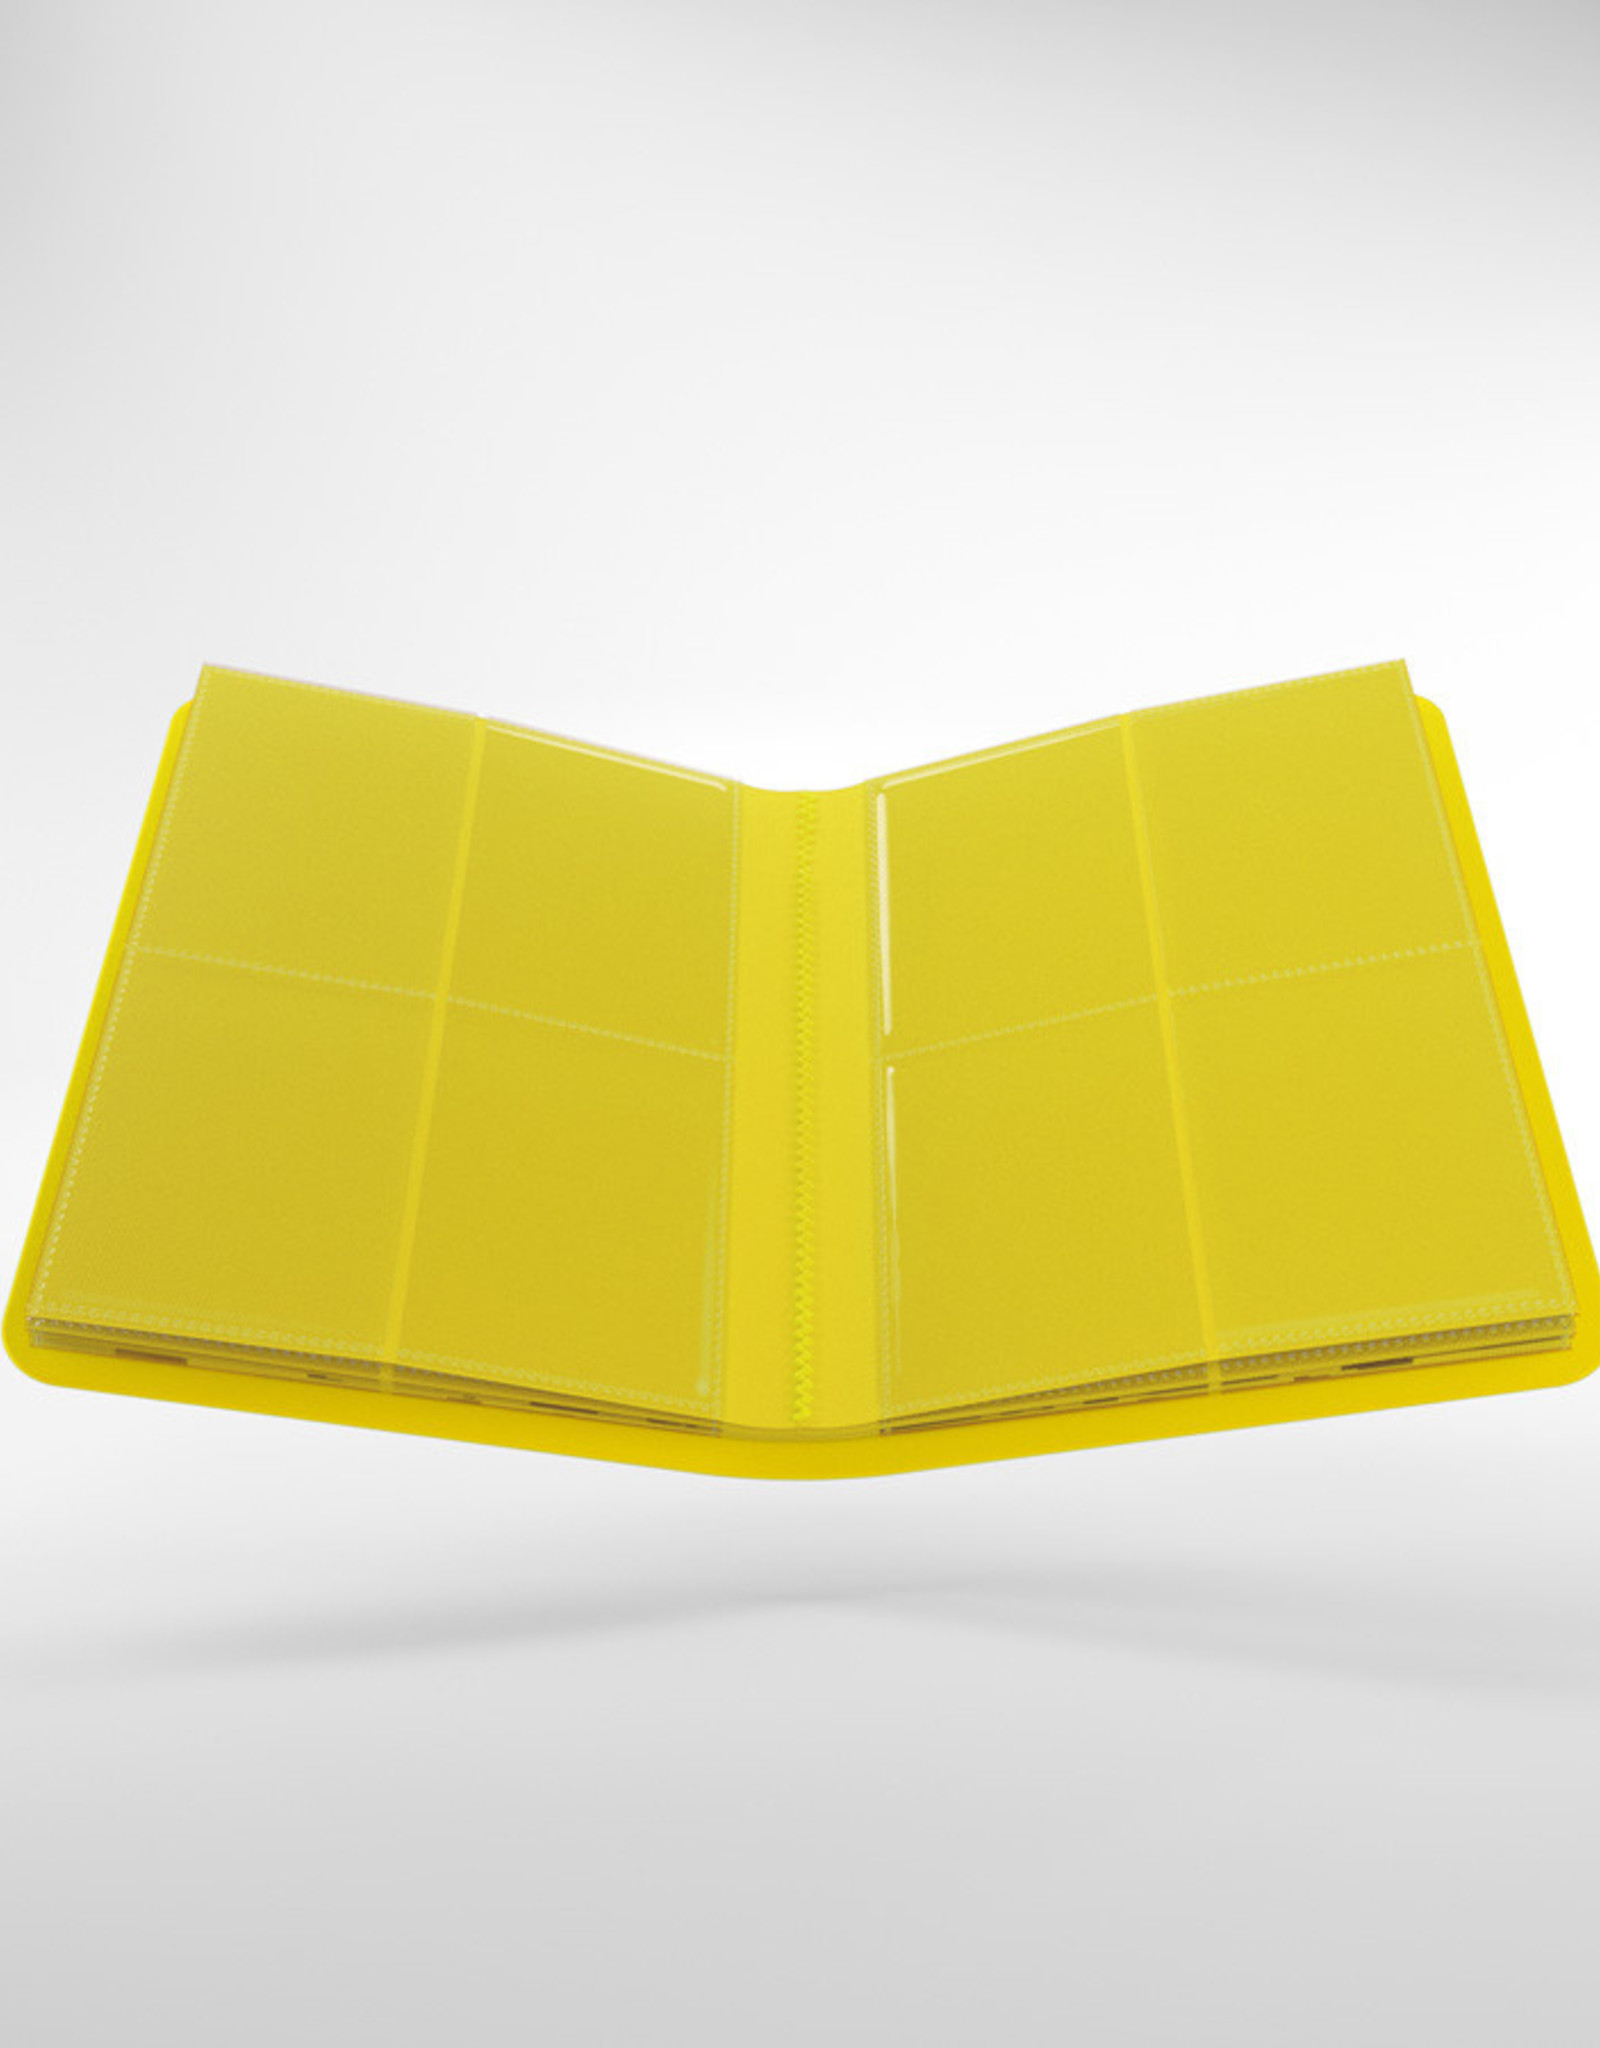 8-Pocket Casual Album: Yellow